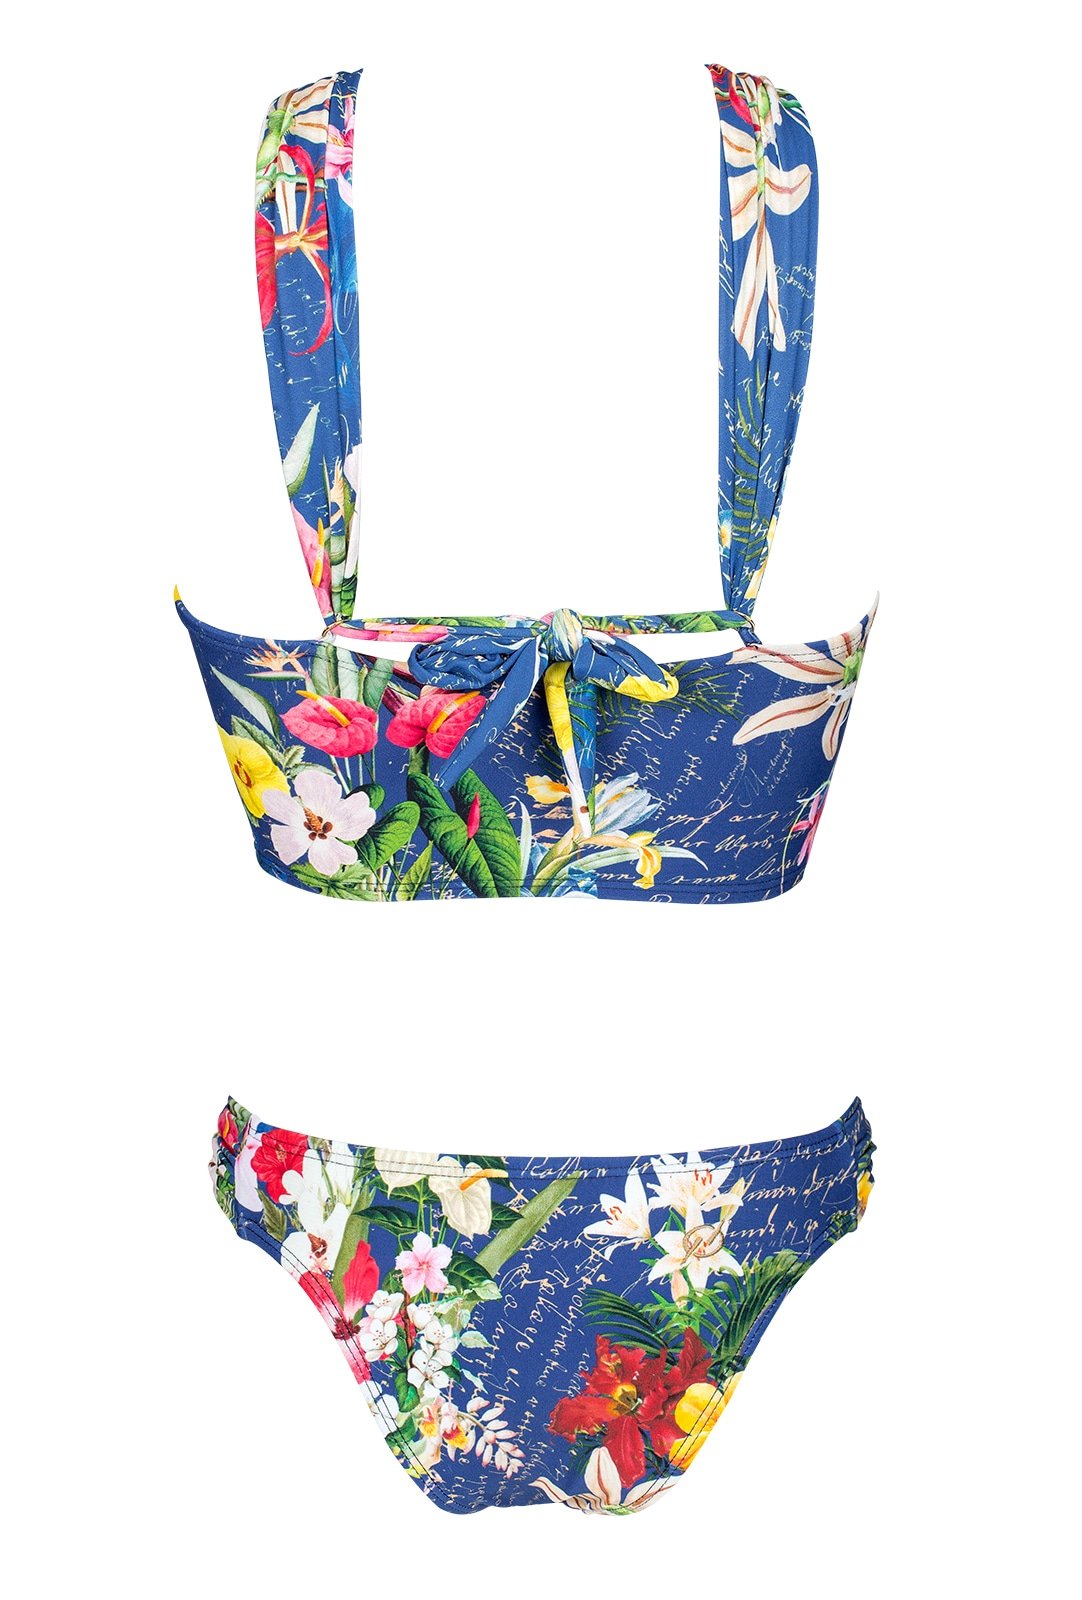 Blue Floral Crop Top Bikini With Eyelet Detail - Ilhos Pacifico - Blueman